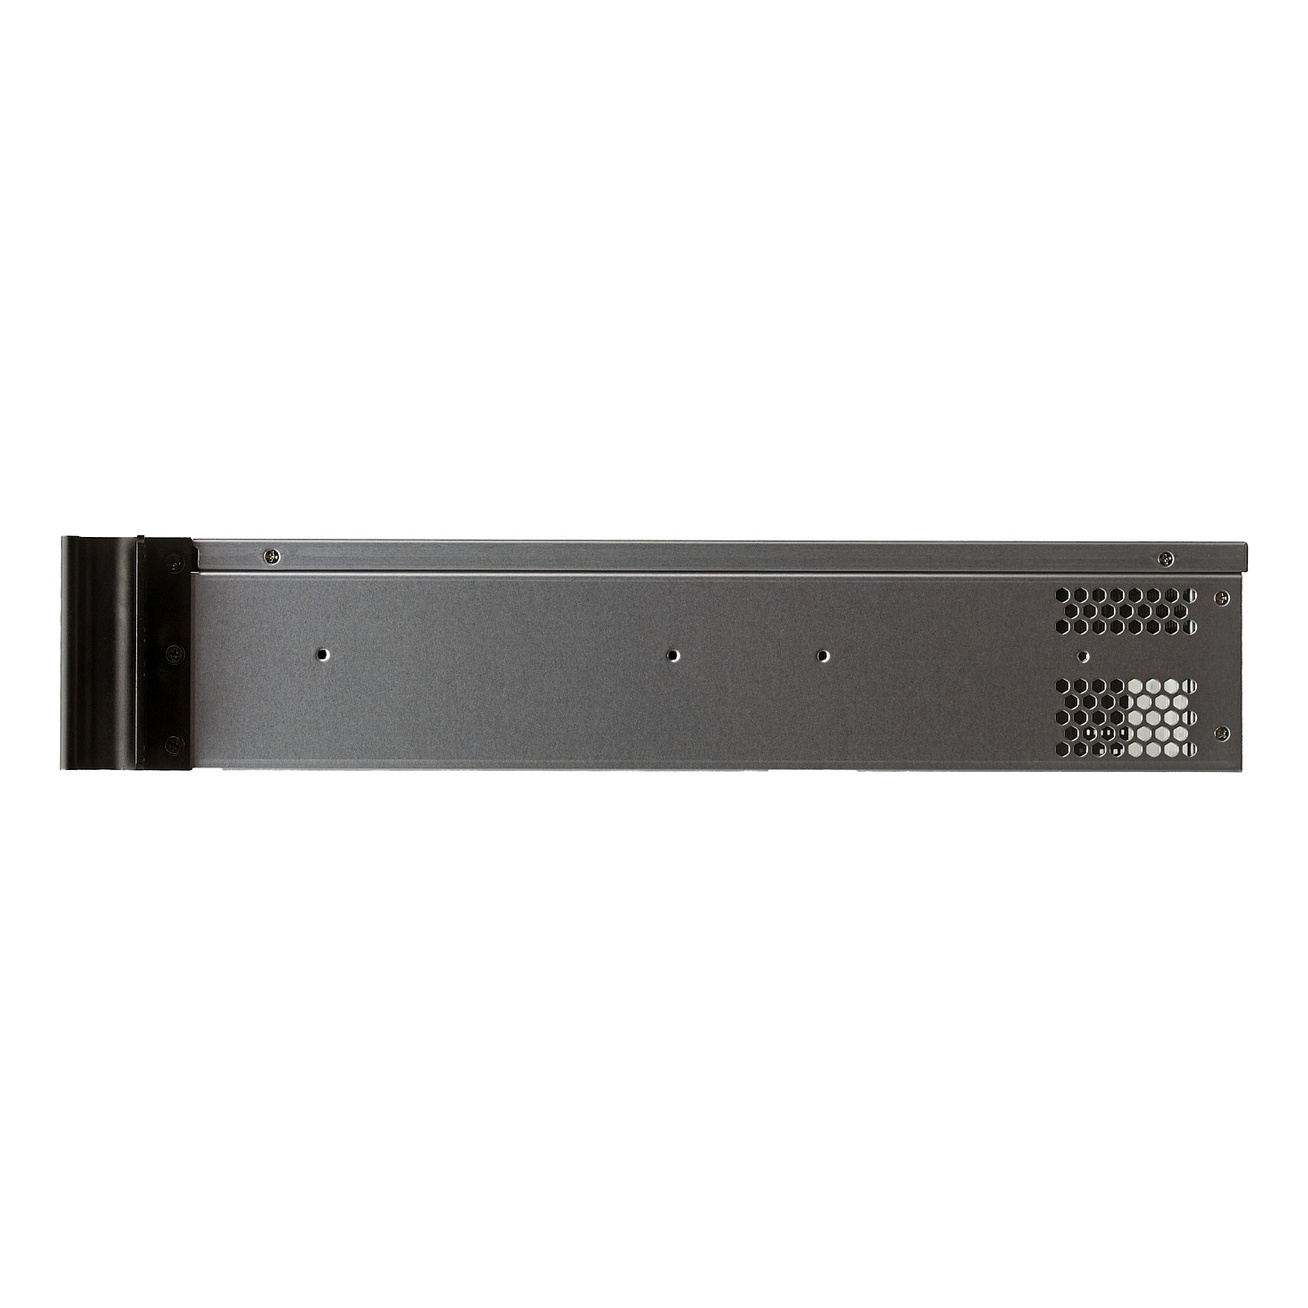 Цифровой видеорегистратор IPDROM NVR Business M-64A-4H